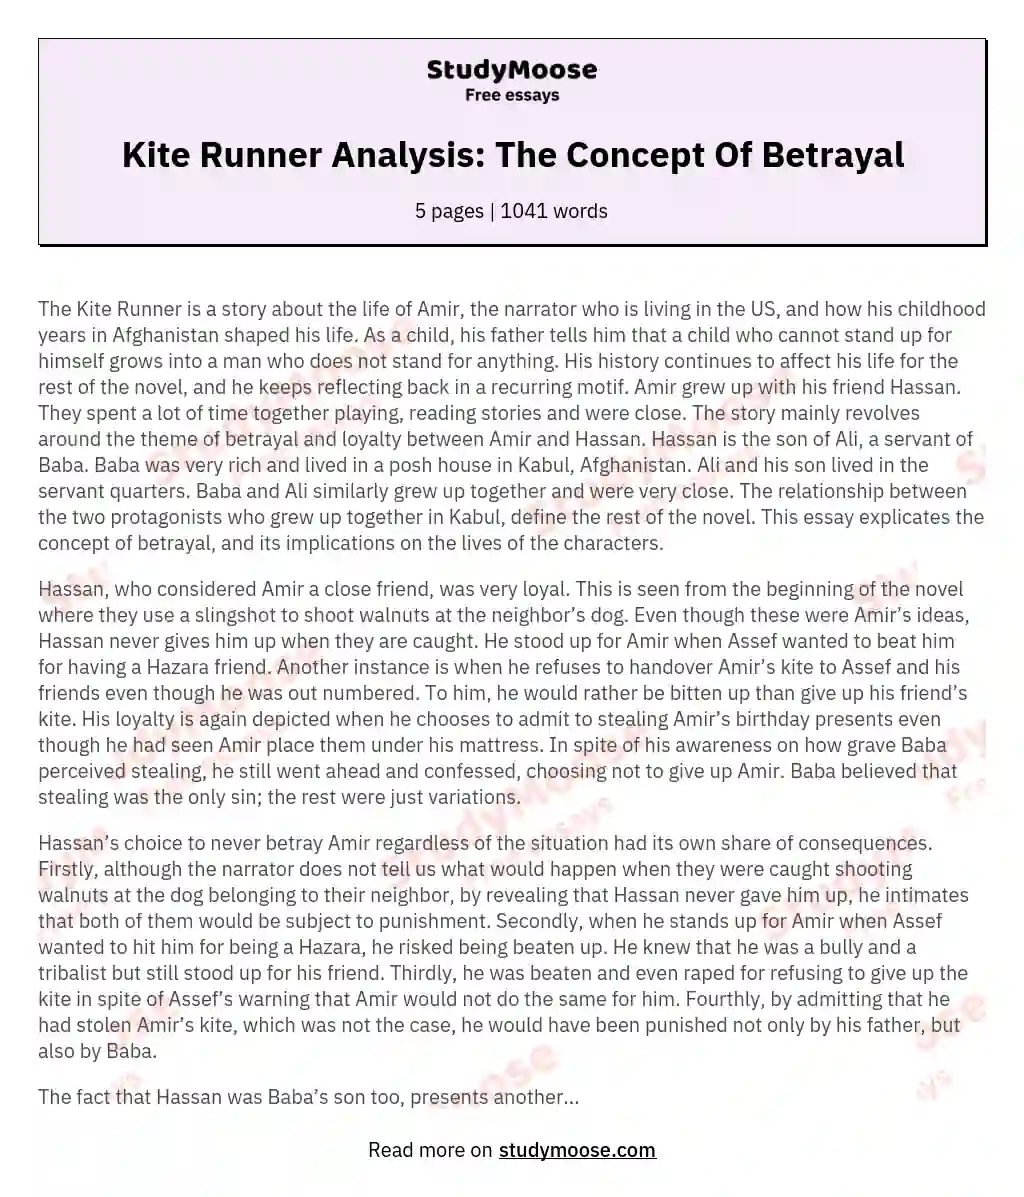 kite runner analysis essay